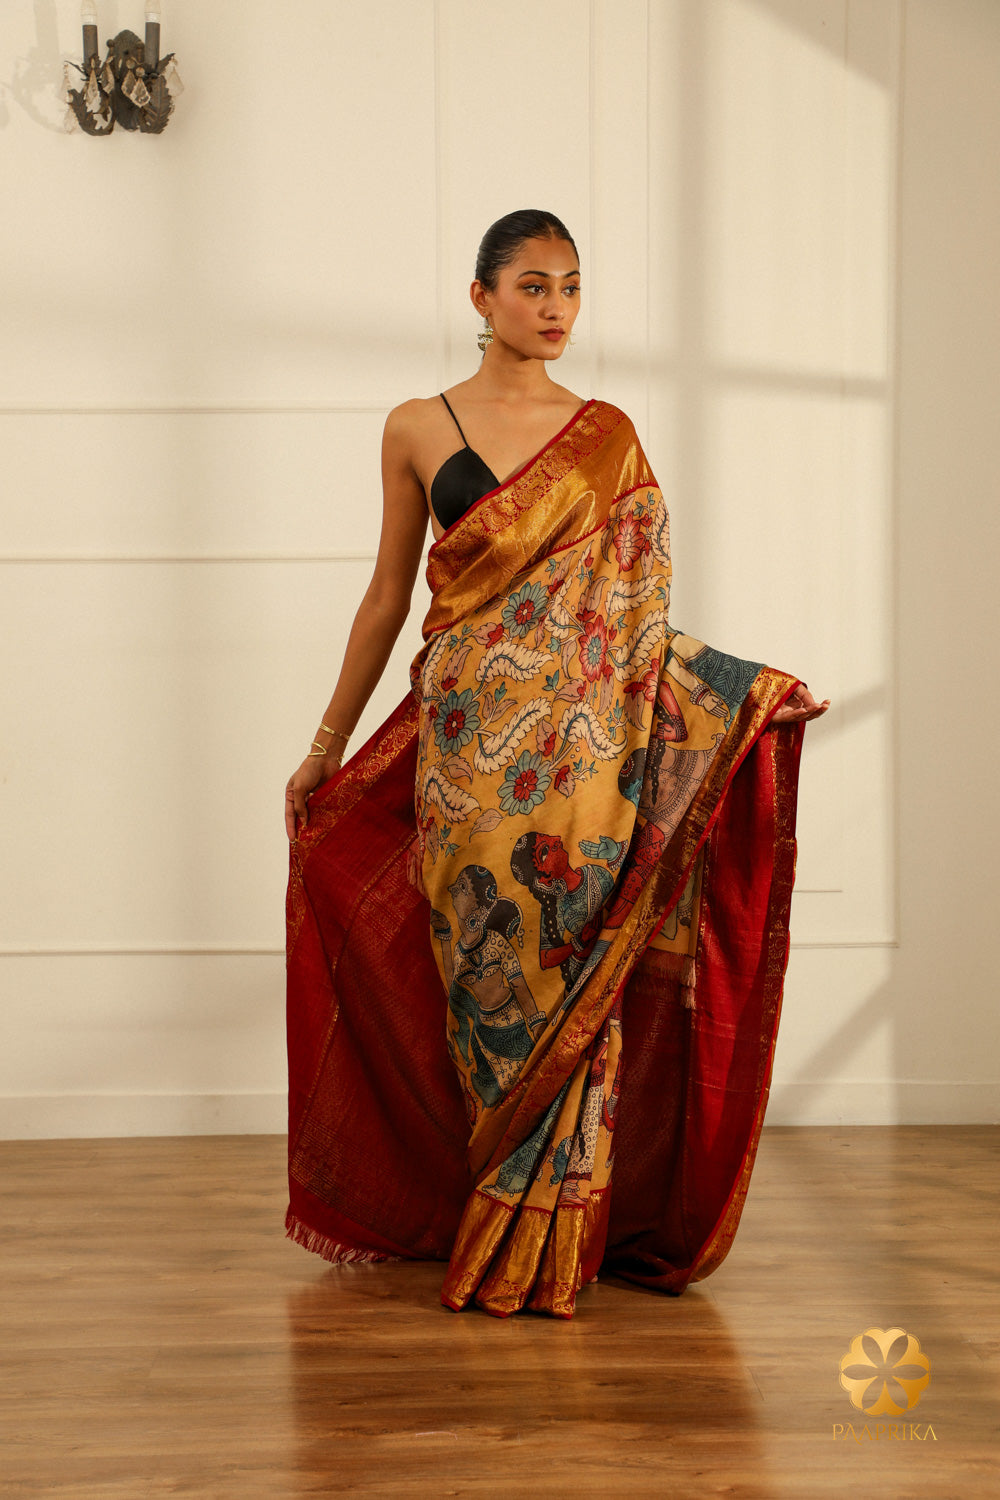 A full-length shot of a woman gracefully draped in the Kanjivaram saree, radiating elegance and charm.